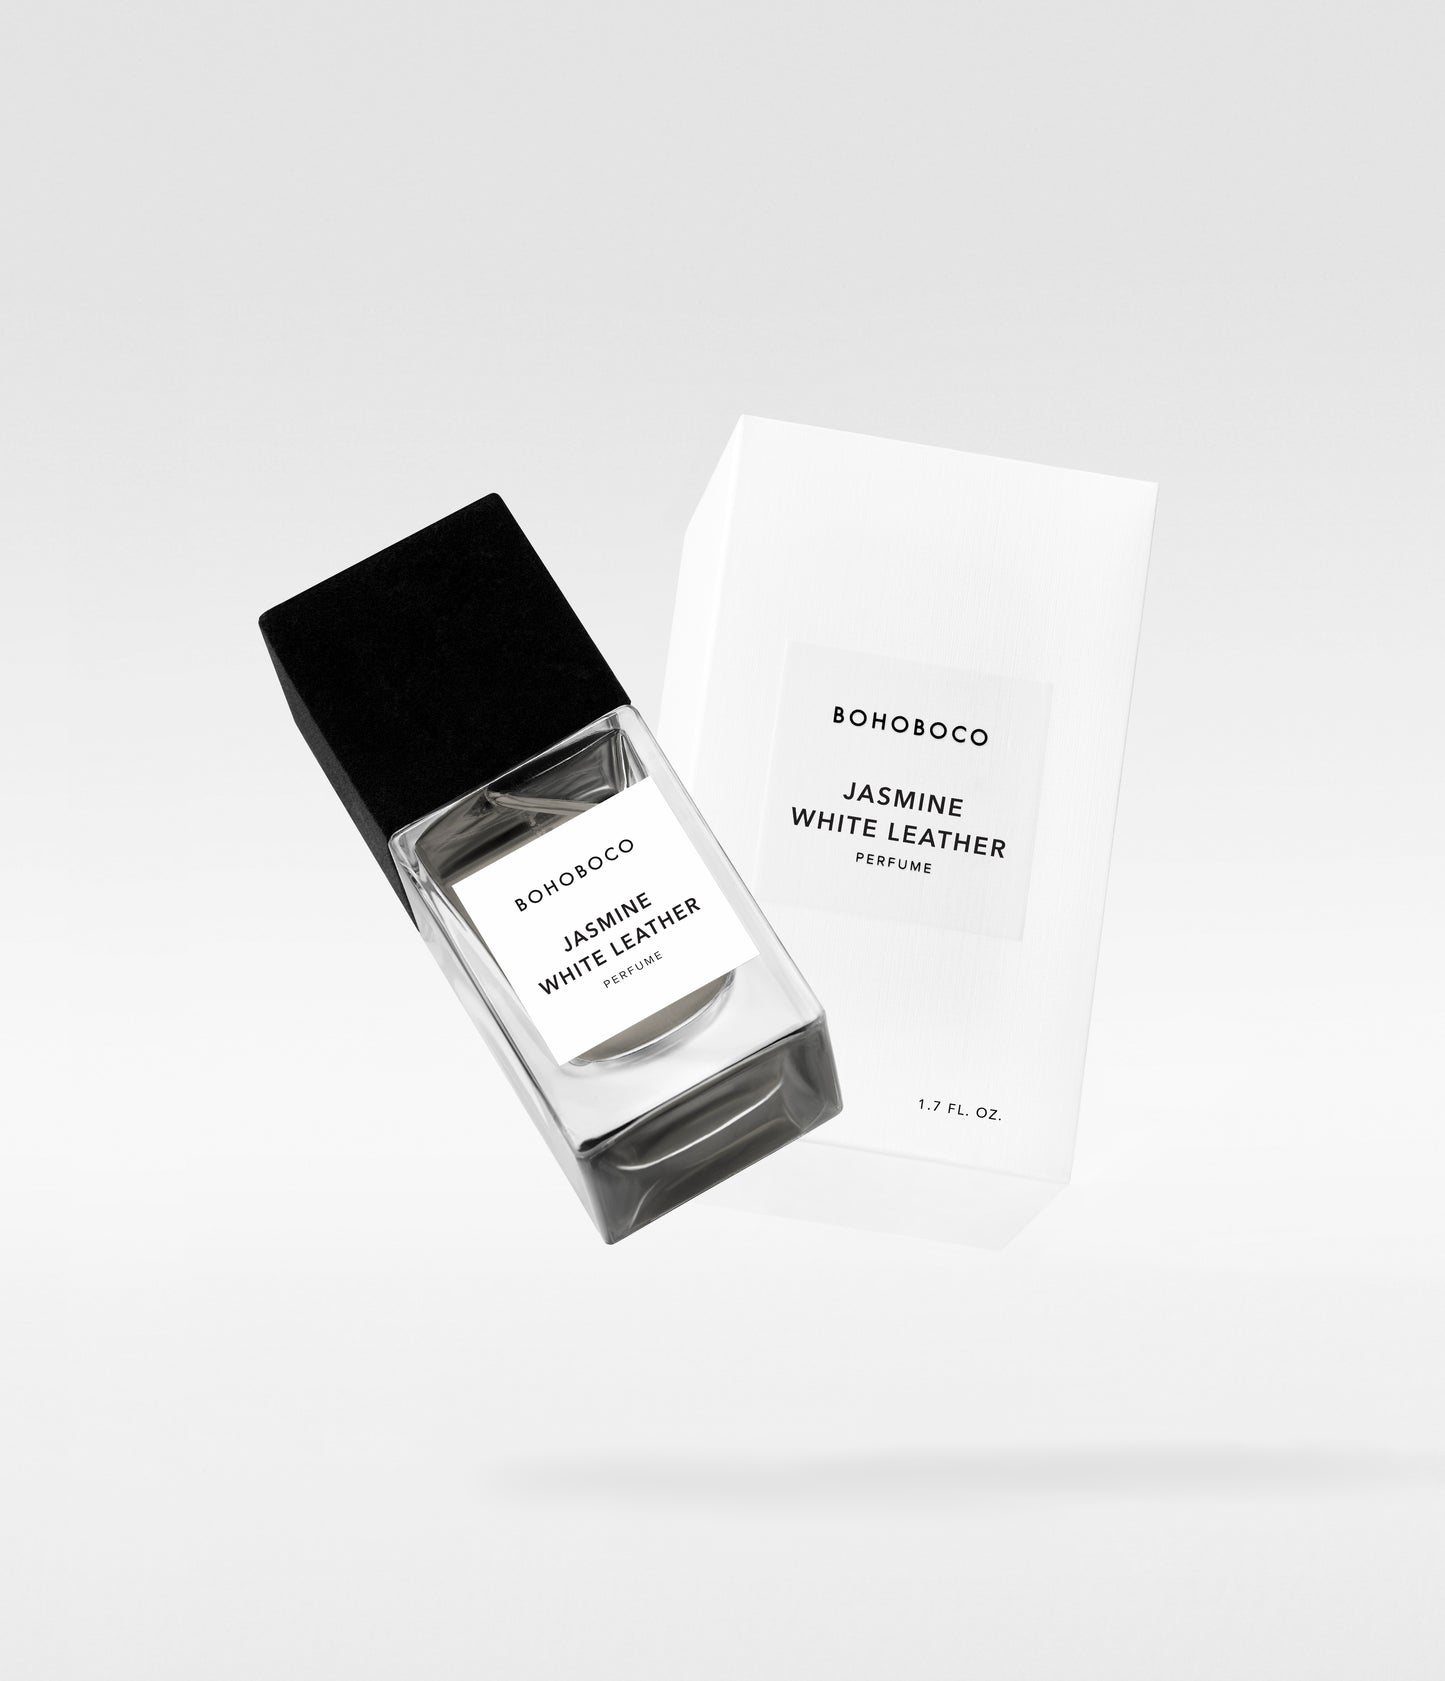 Jasmine & White Leather Bohoboco Extrait de Parfum Sample 2ml